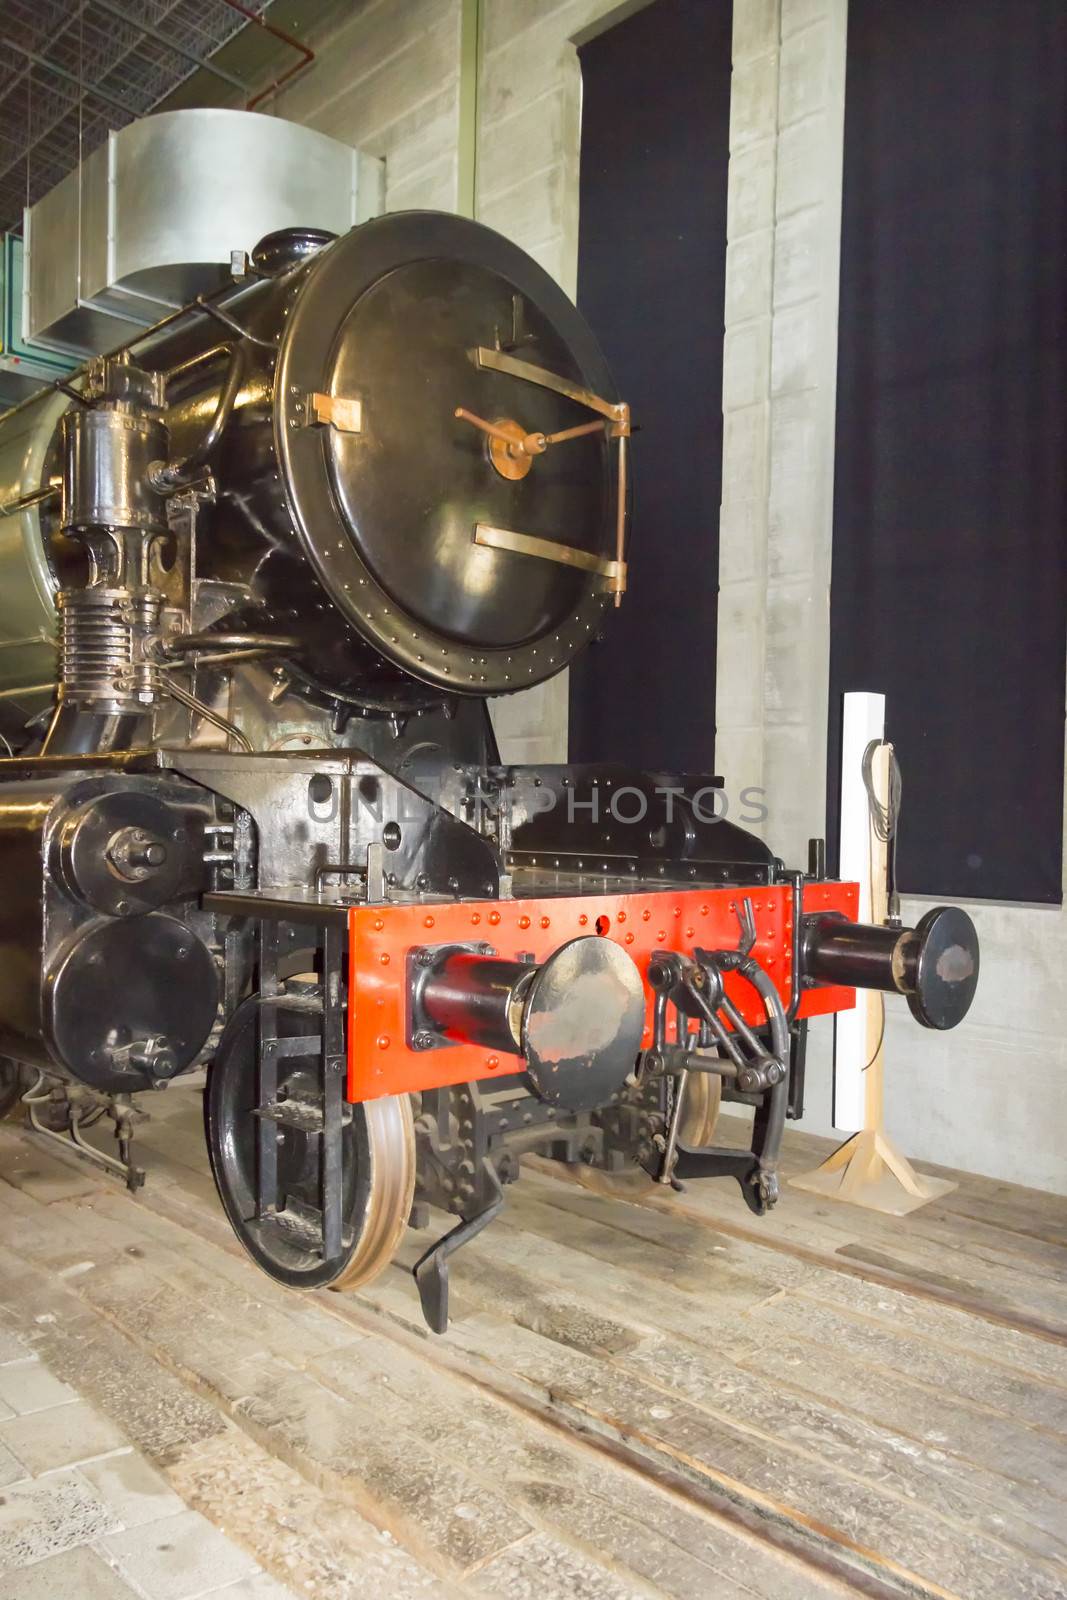 stem locomotive in Utrecht Railroad Museum, the Netherlands by Tetyana